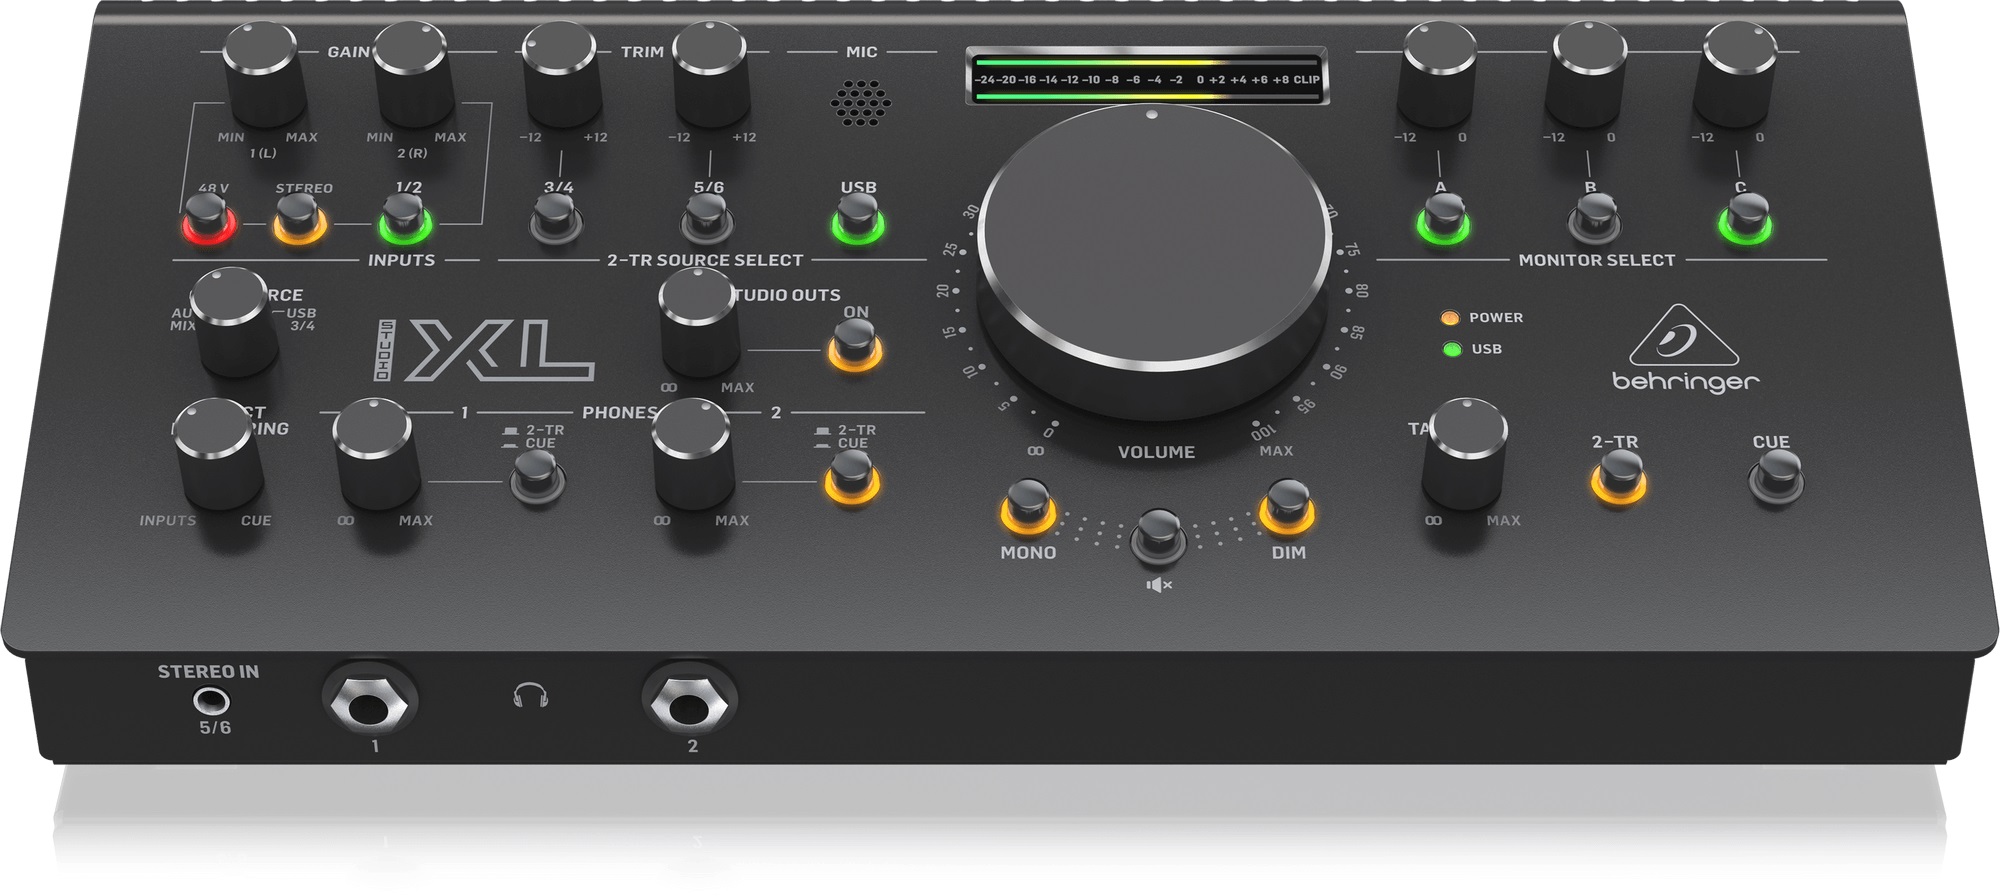 Контроллеры Behringer STUDIO XL behringer x32 rack music equipment 32 channels 16 xlr inputs studio sound system rack mixer